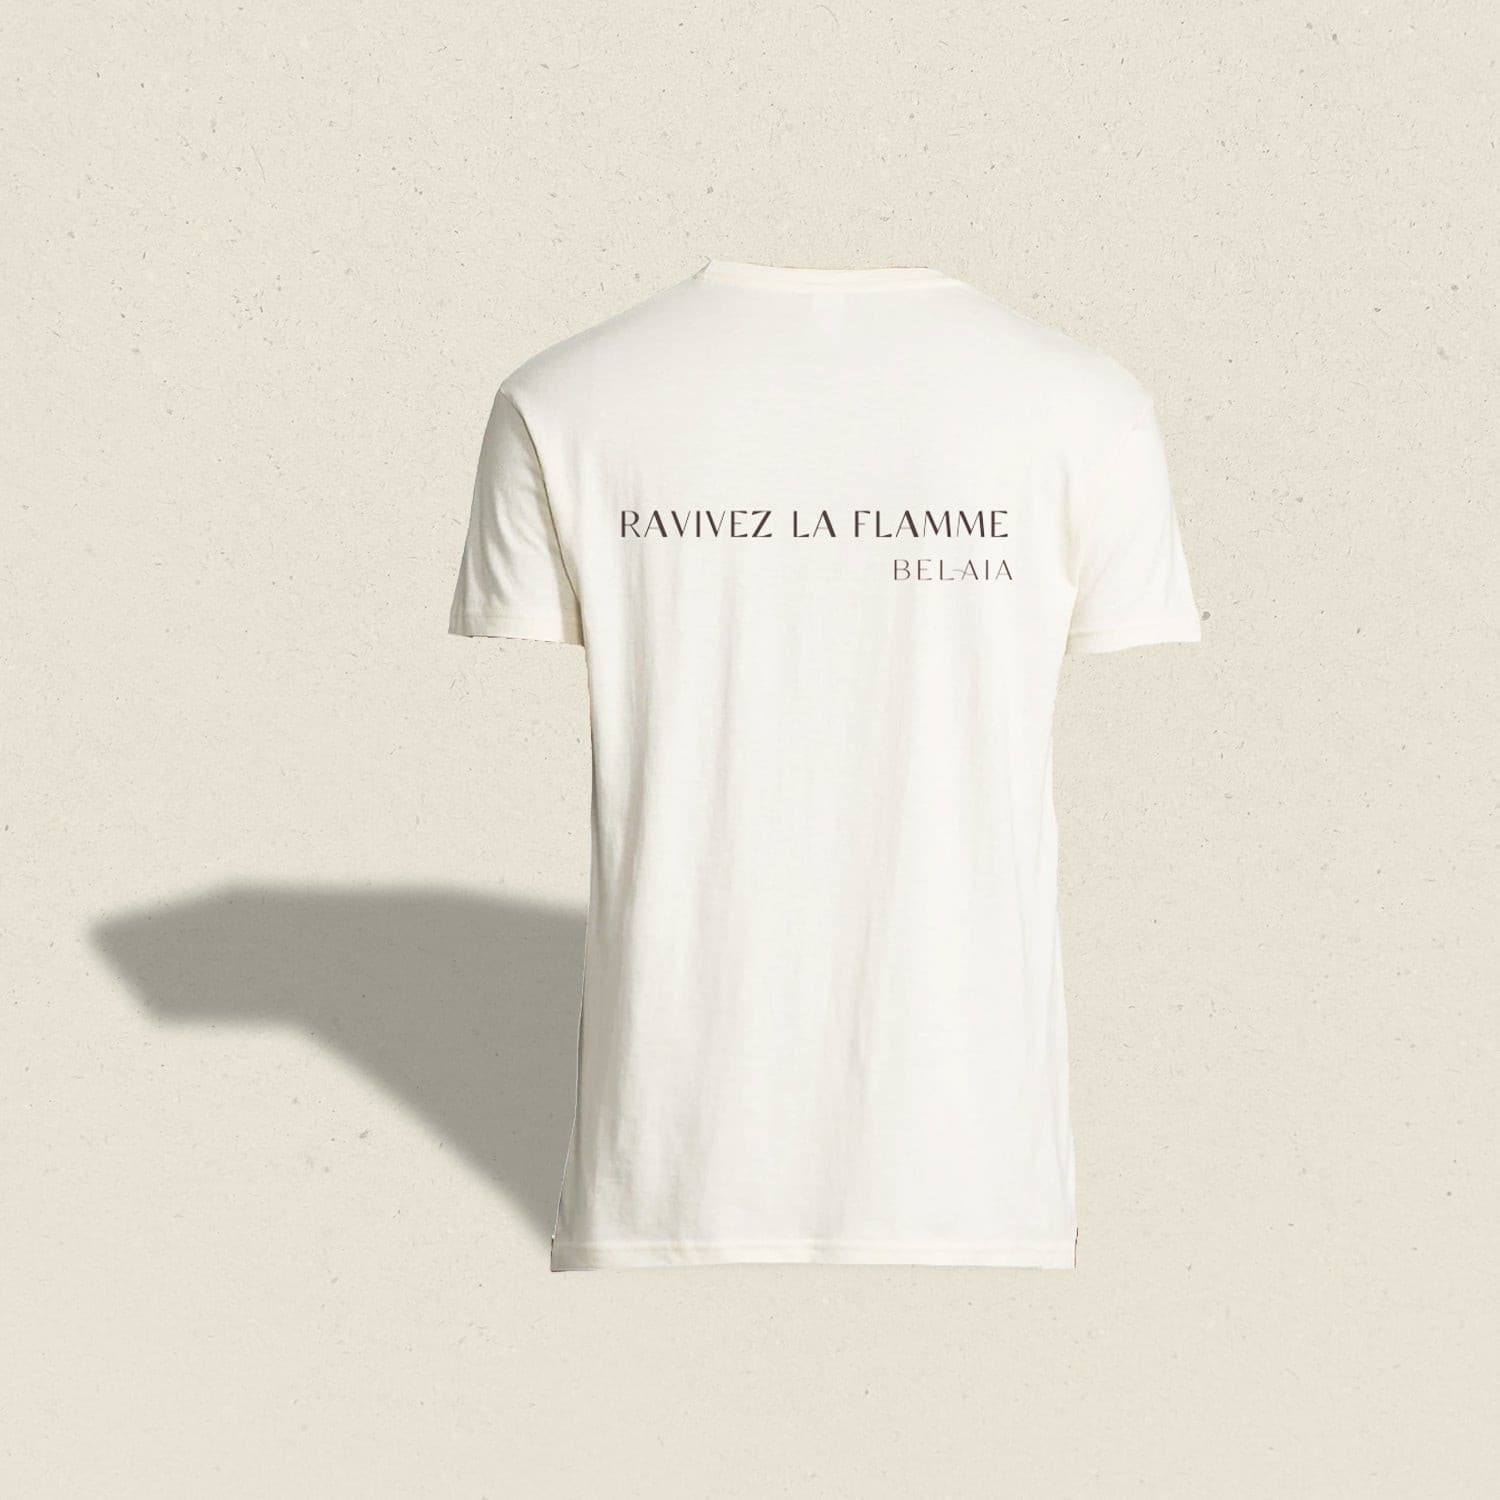 BELAIA | T-shirt « RAVIVEZ LA FLAMME » 